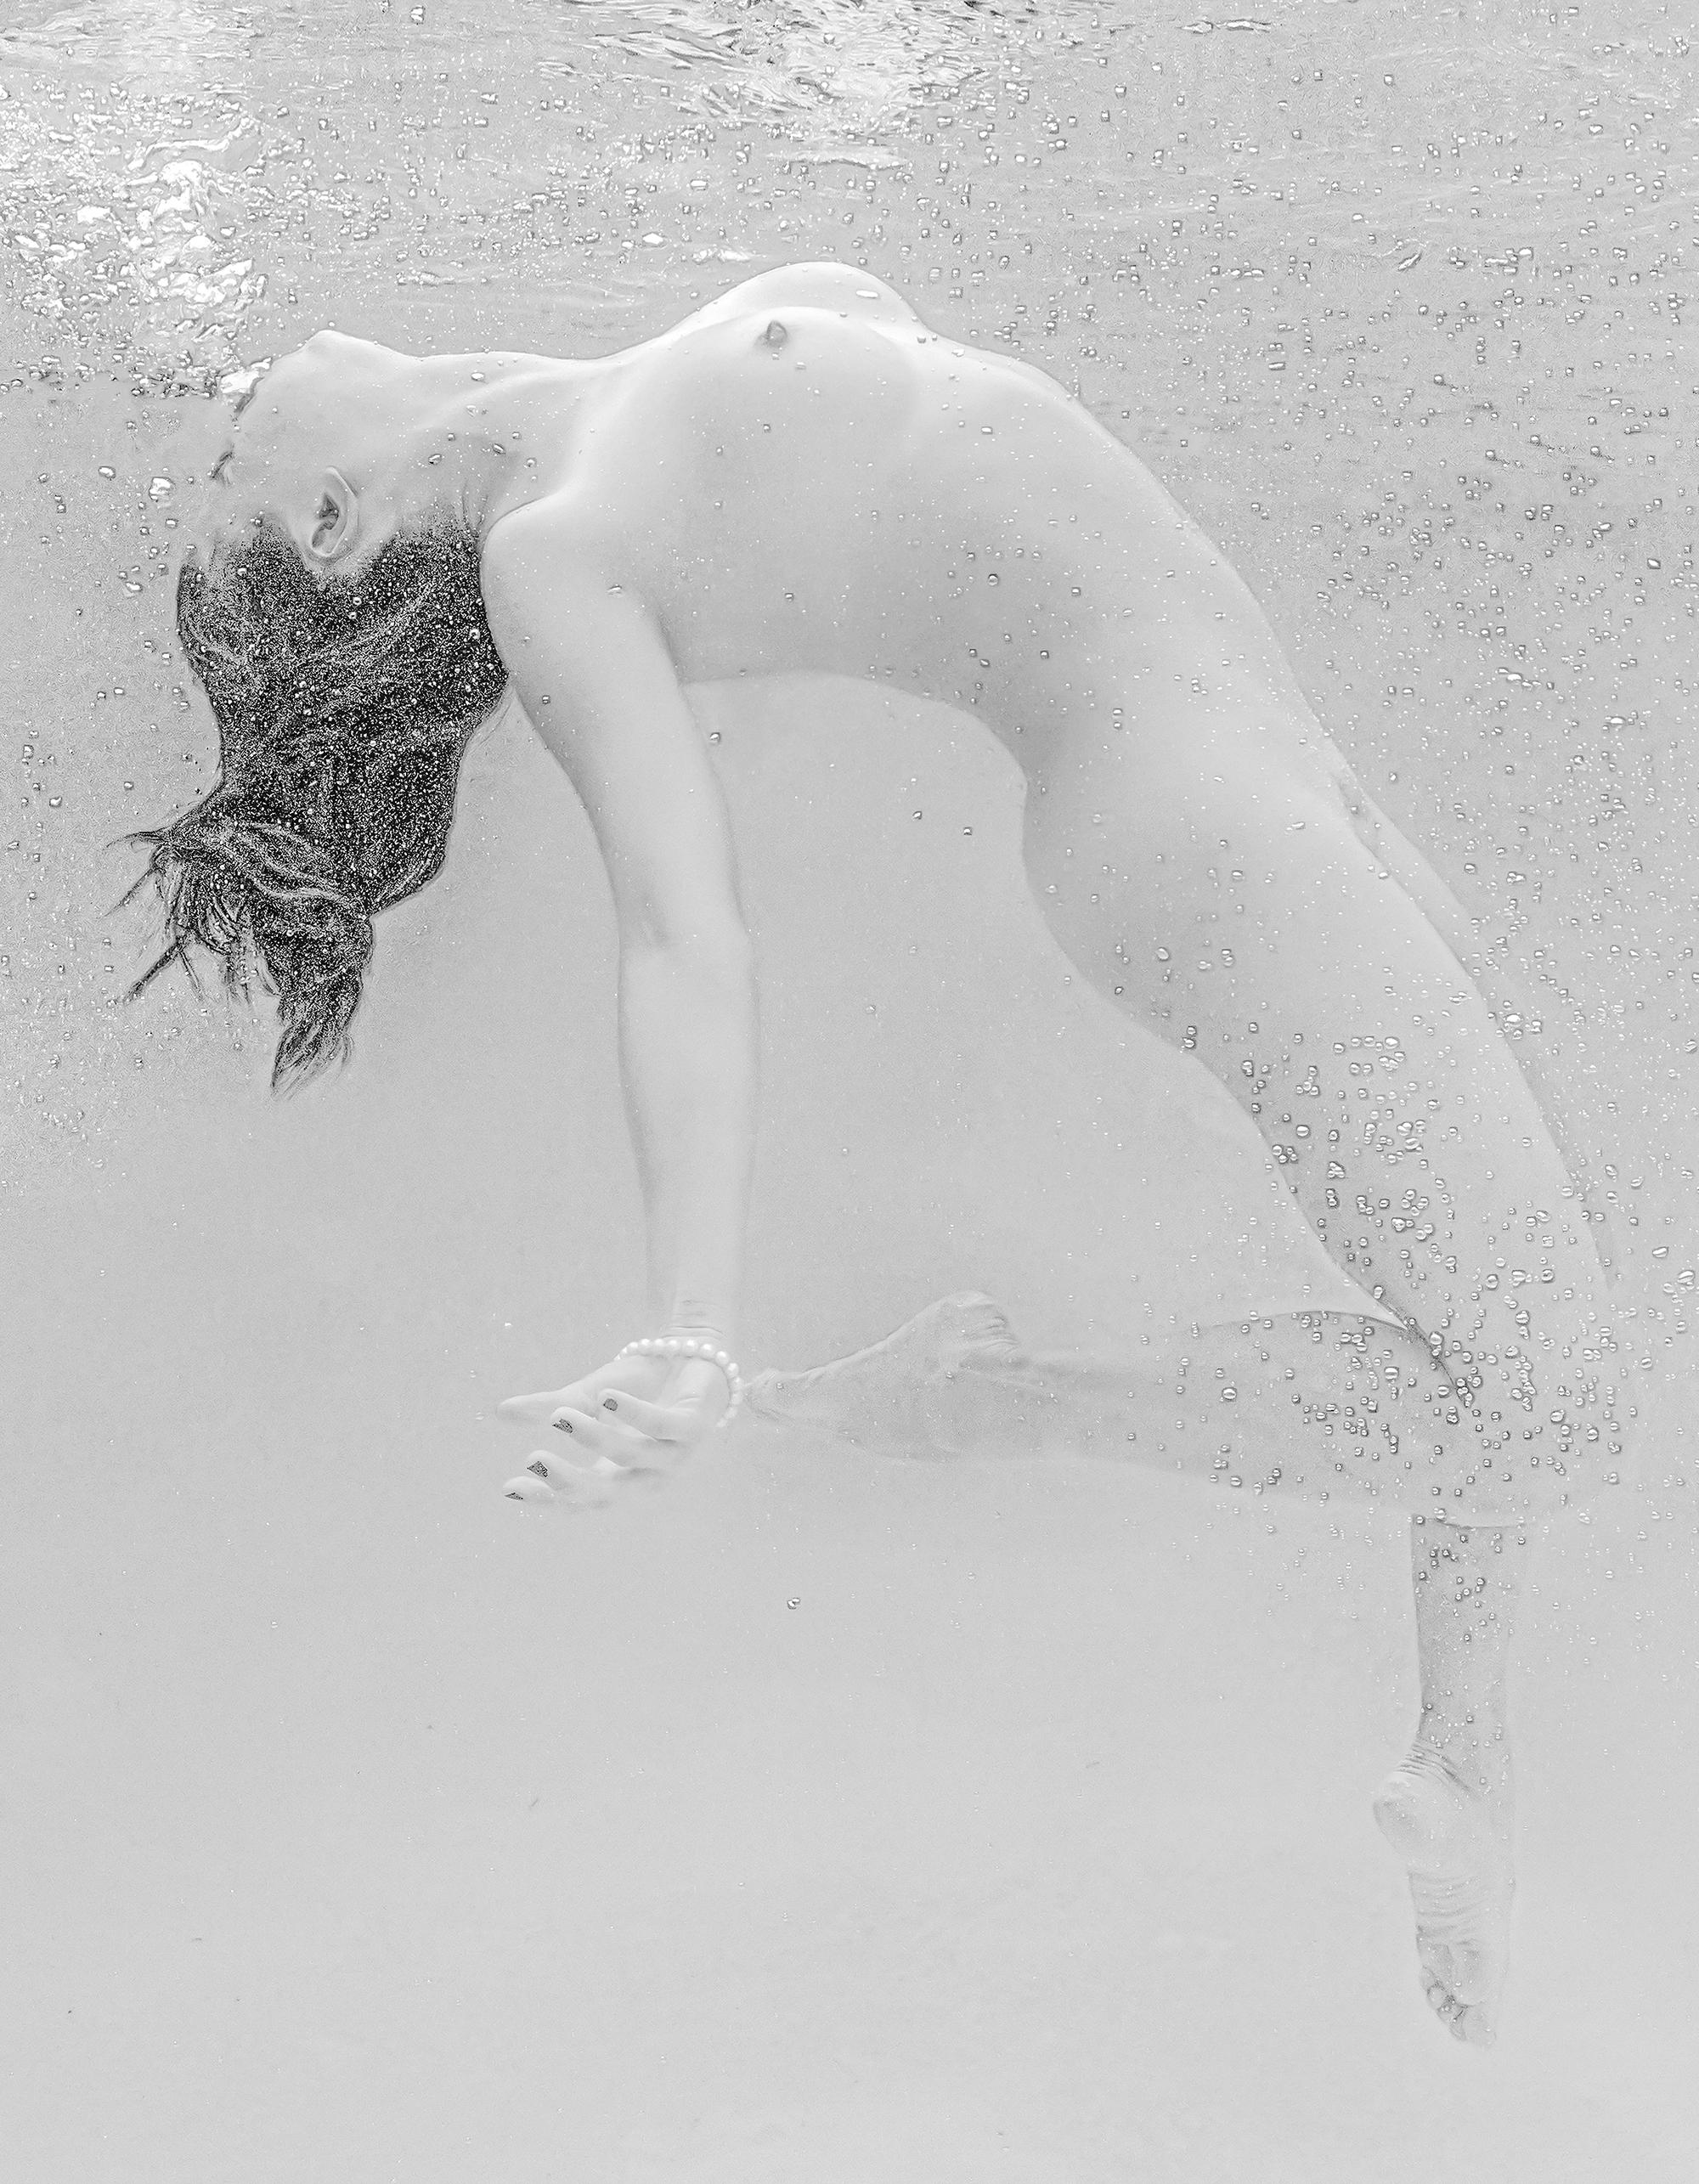 Soft Dance - underwater black & white nude photograph - archival pigment 24